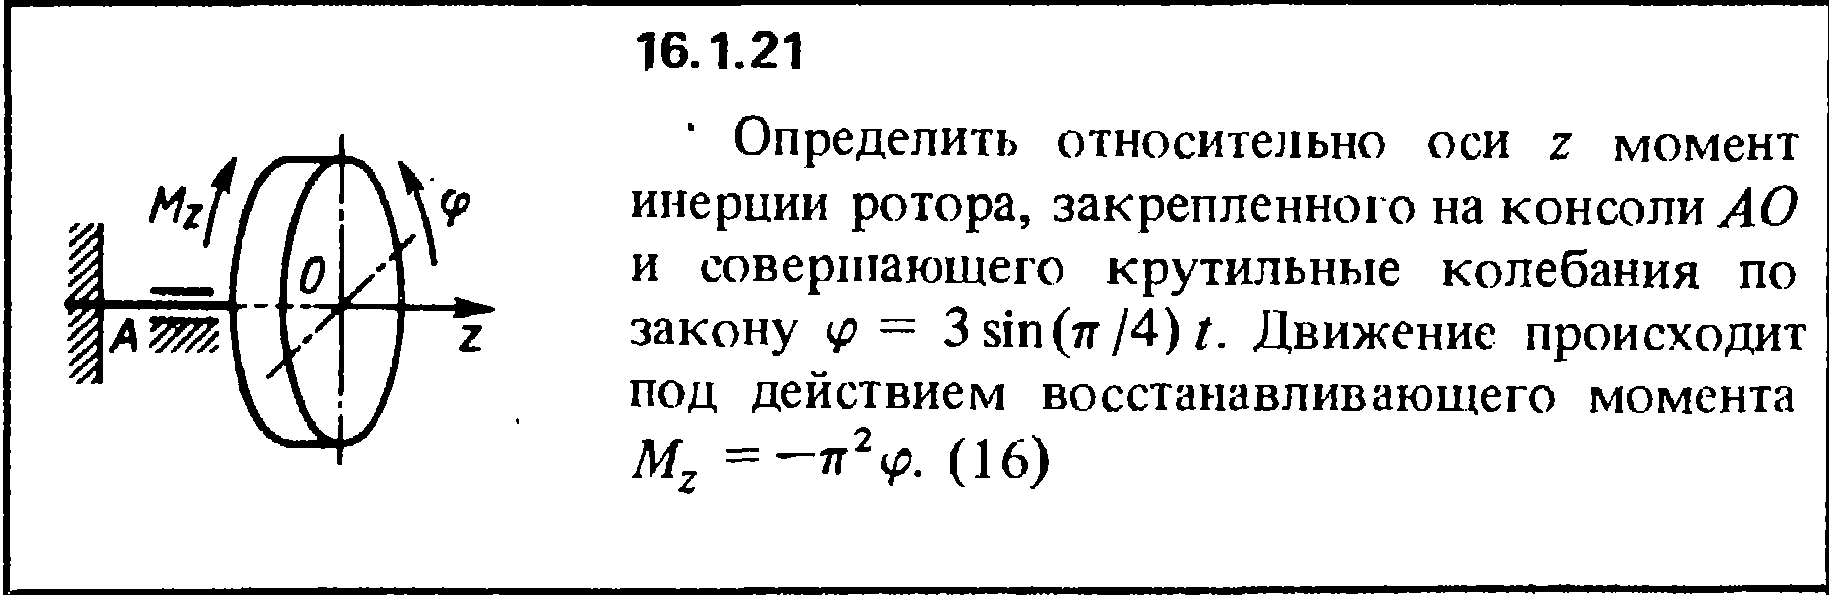 Решение задачи 16.1.21 из сборника Кепе О.Е. 1989 года